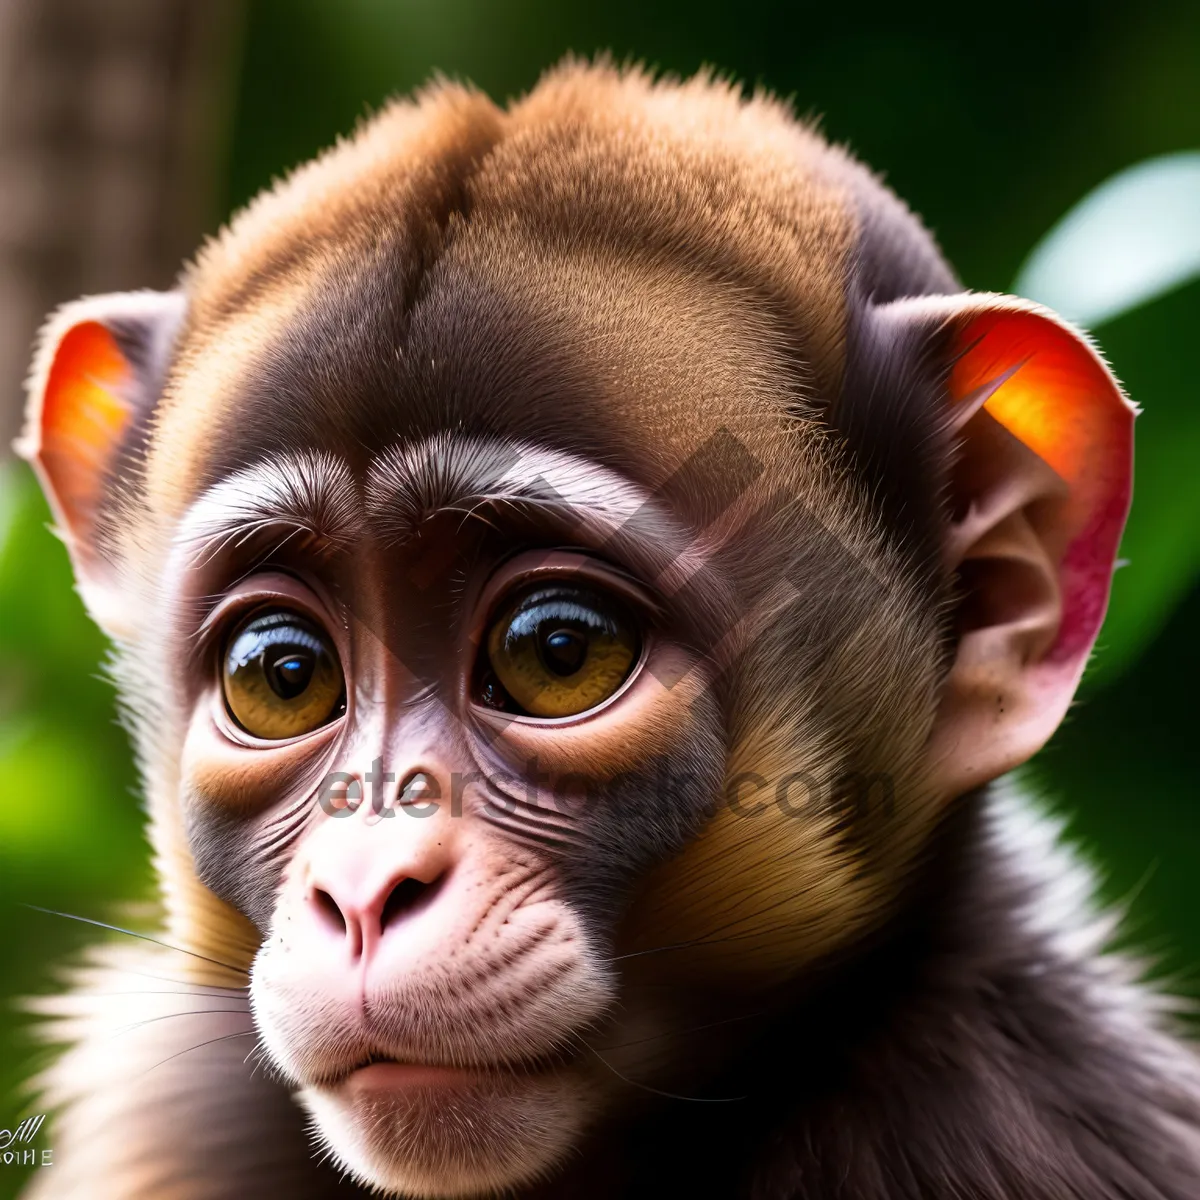 Picture of Endangered Orangutan in Jungle Habitat